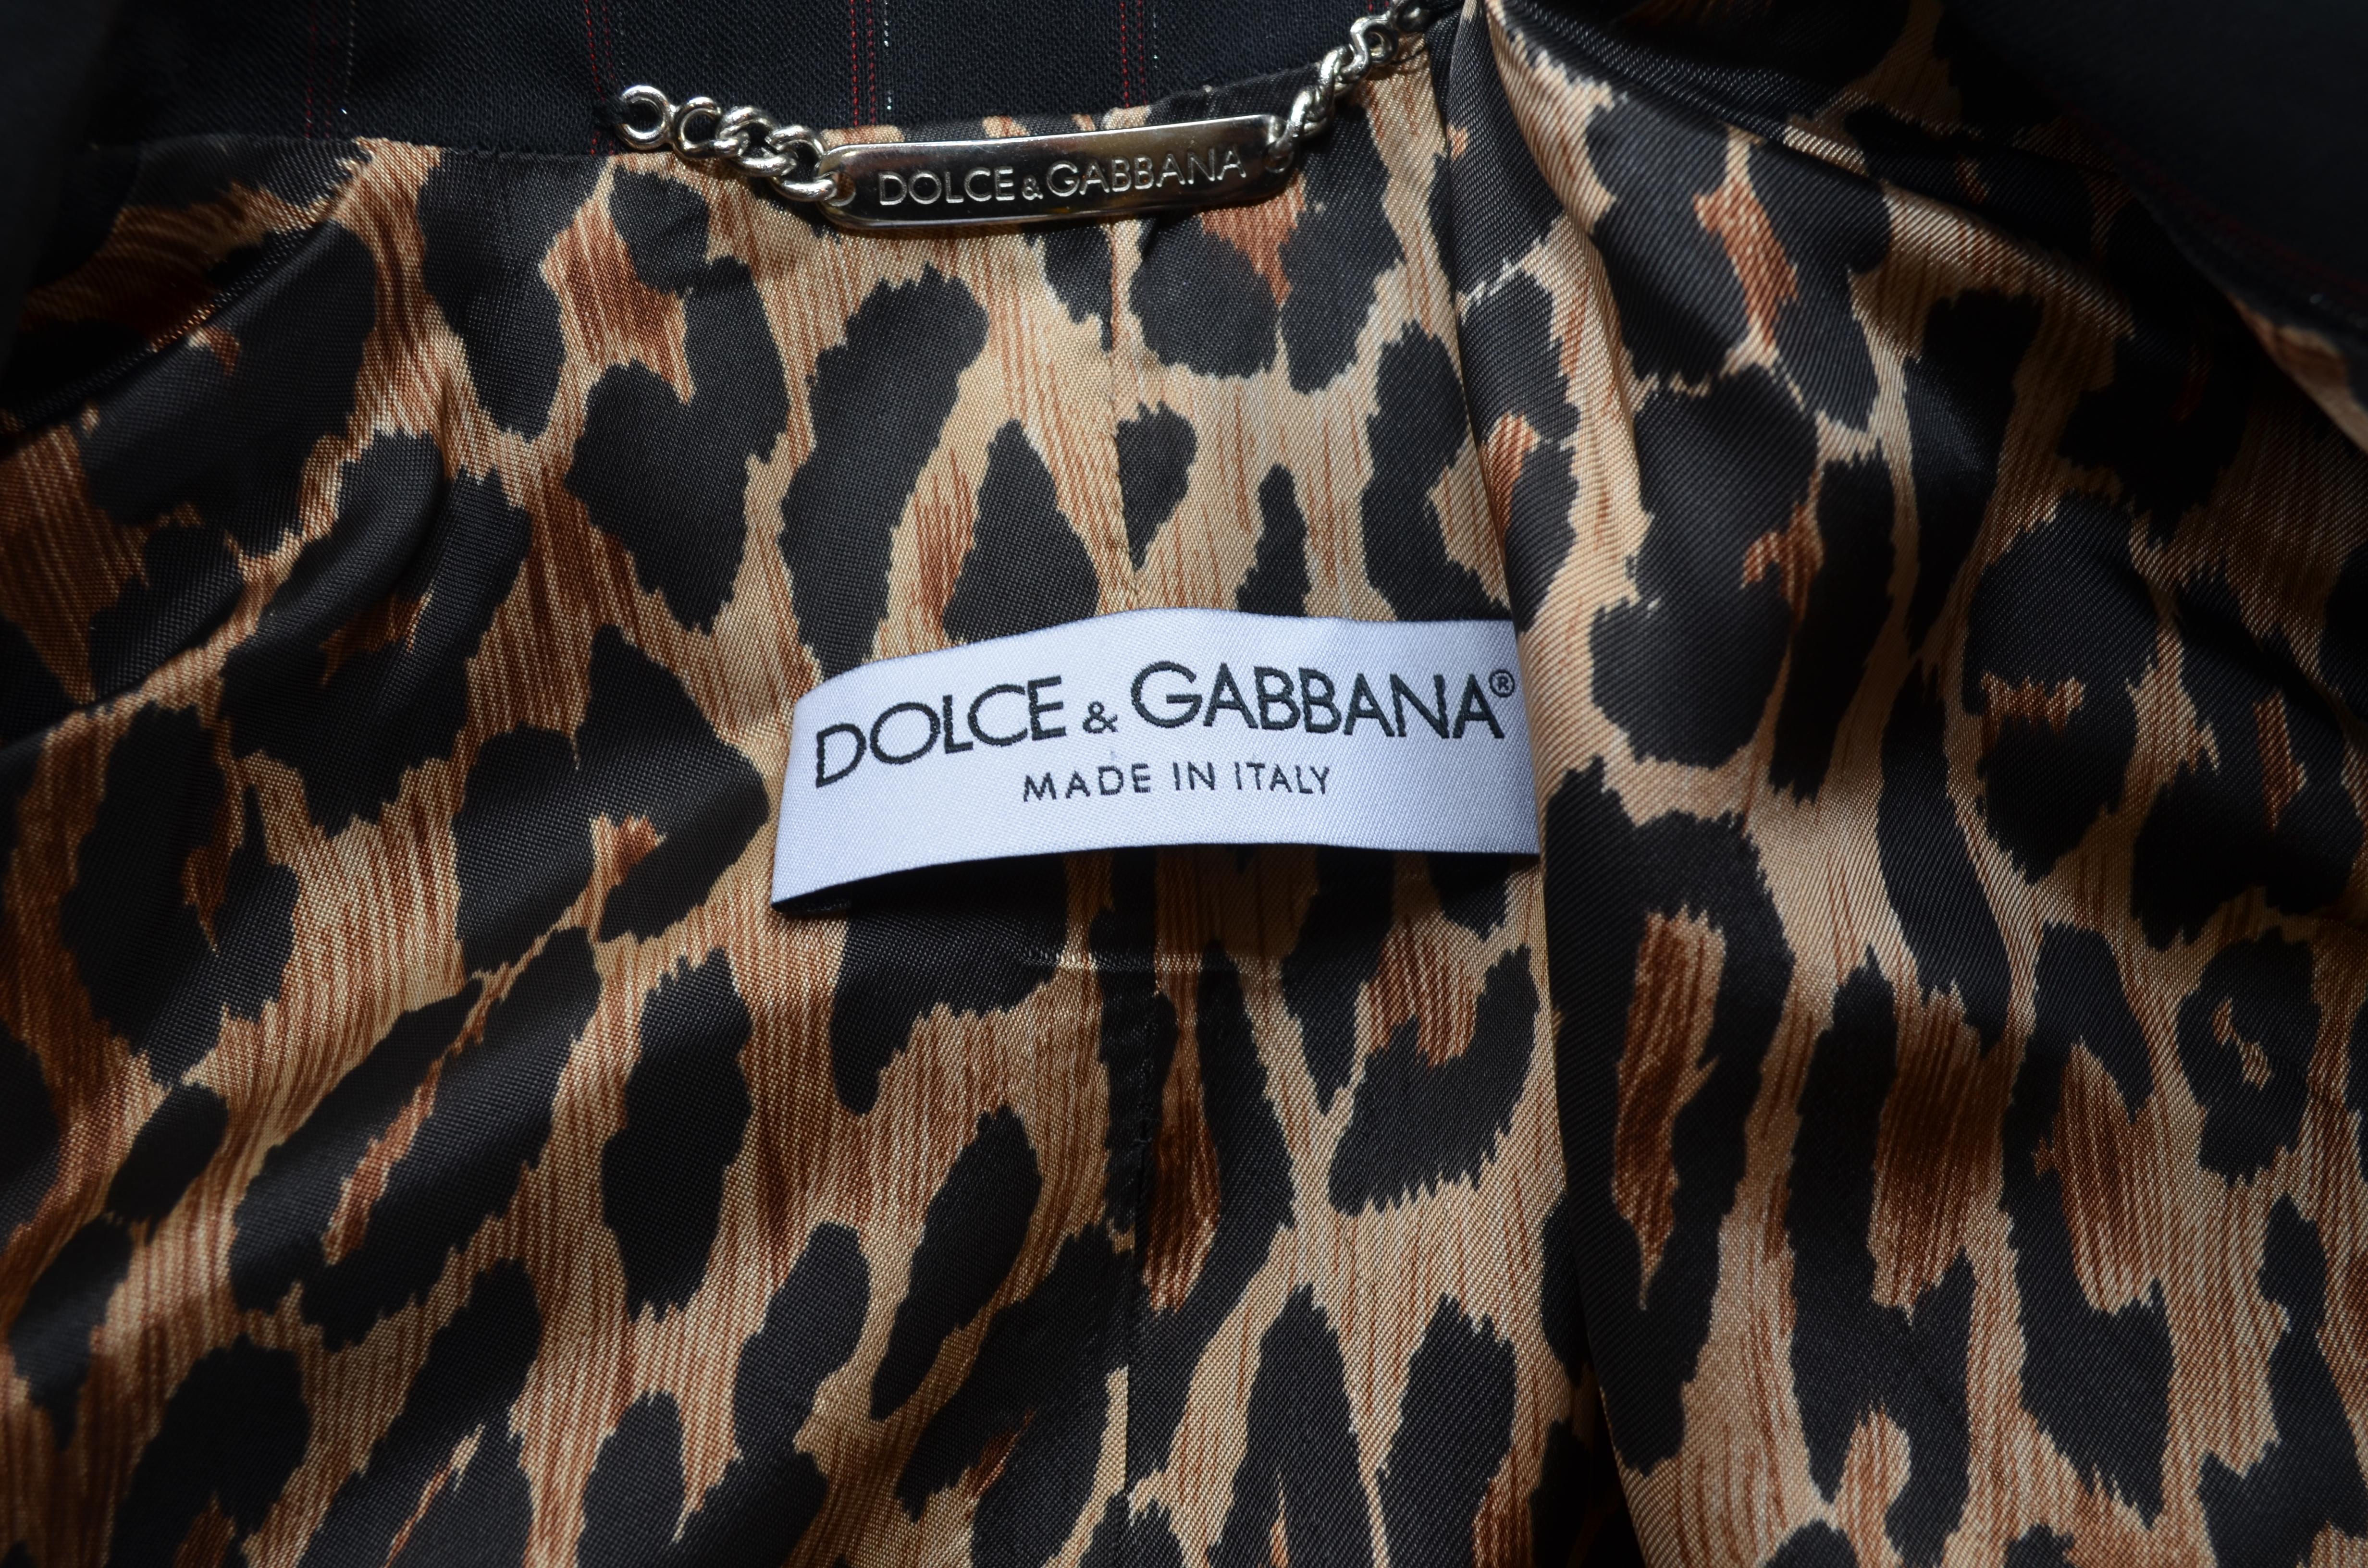 Dolce & Gabbana Black Pinstriped Jacket and Pants Suit Set 2